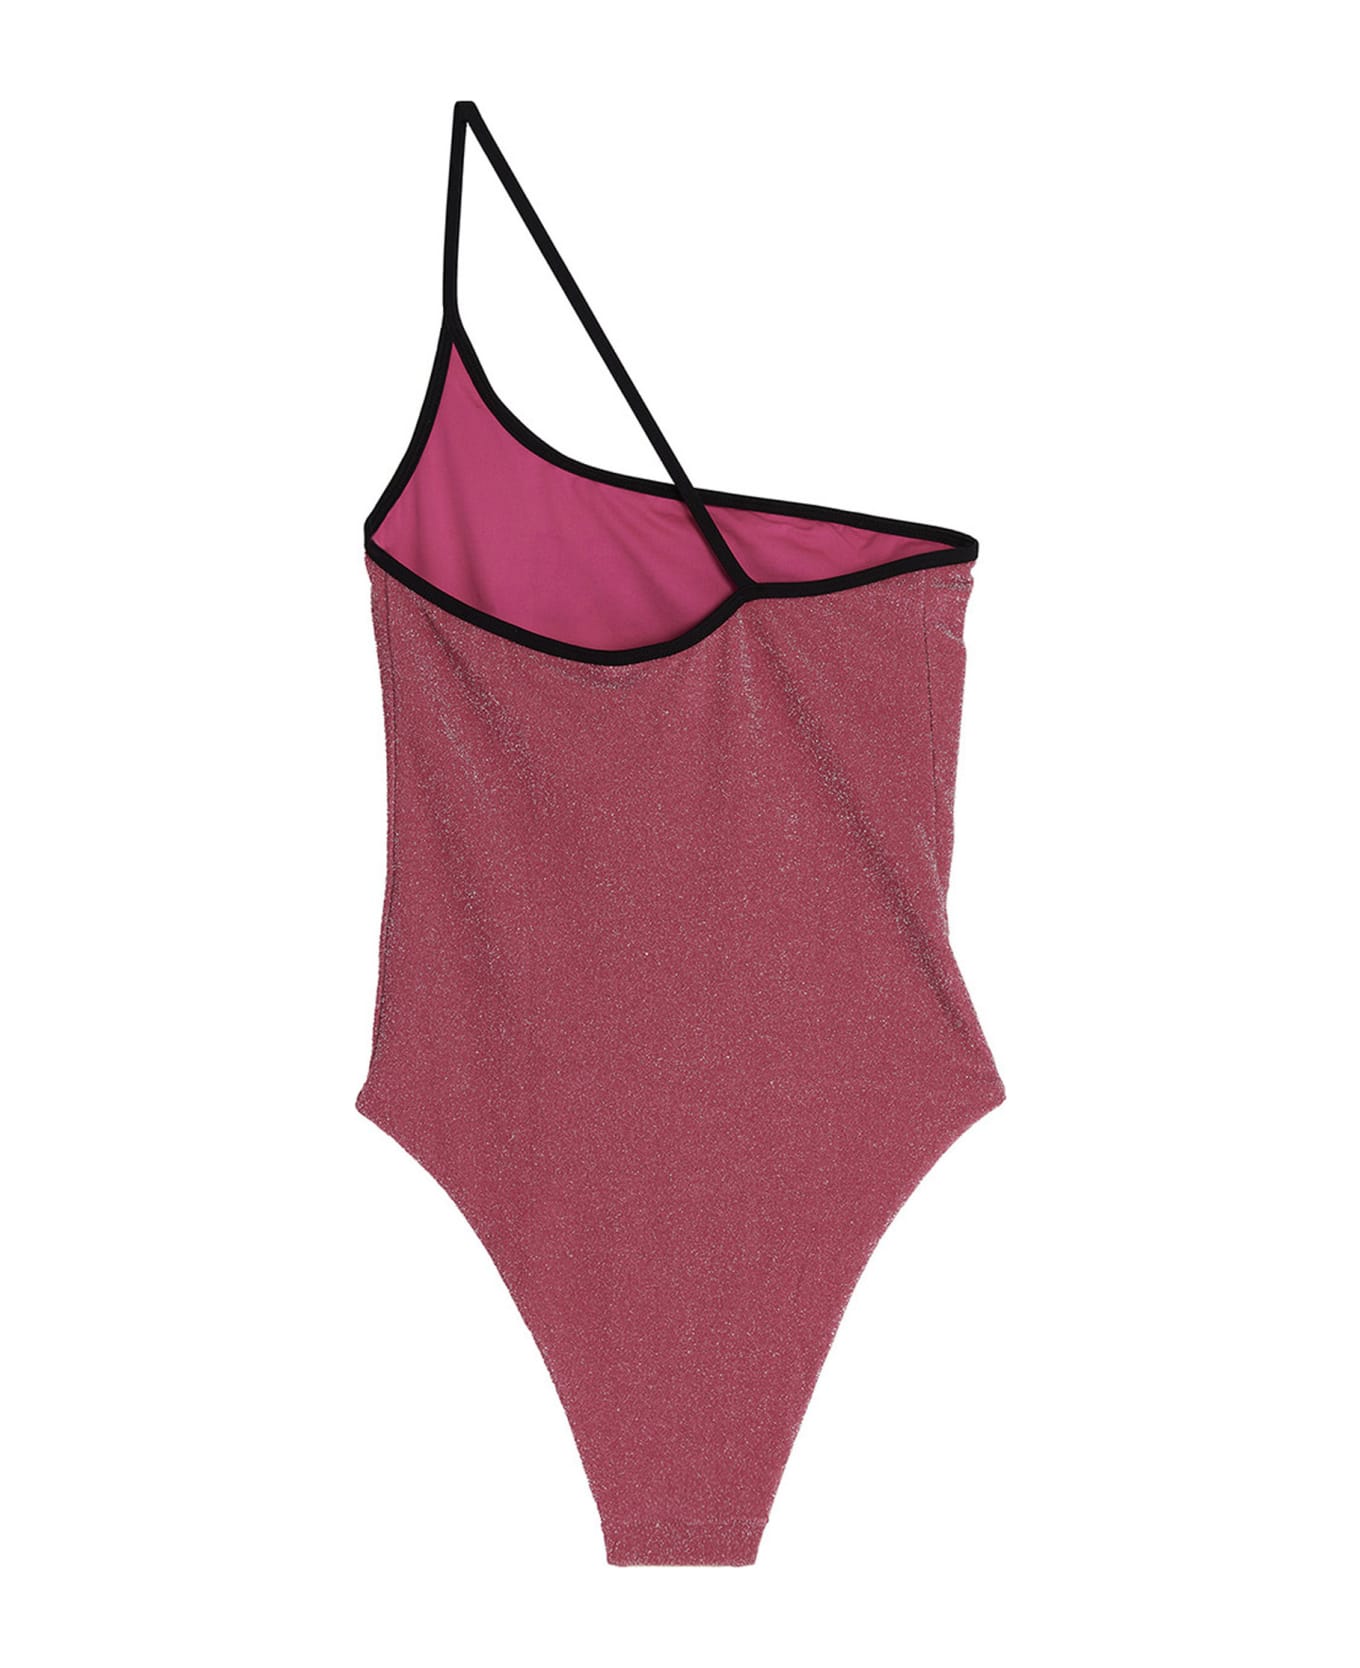 Karl Lagerfeld 'ikonik 2.0' One-piece Swimsuit - Fuchsia 水着